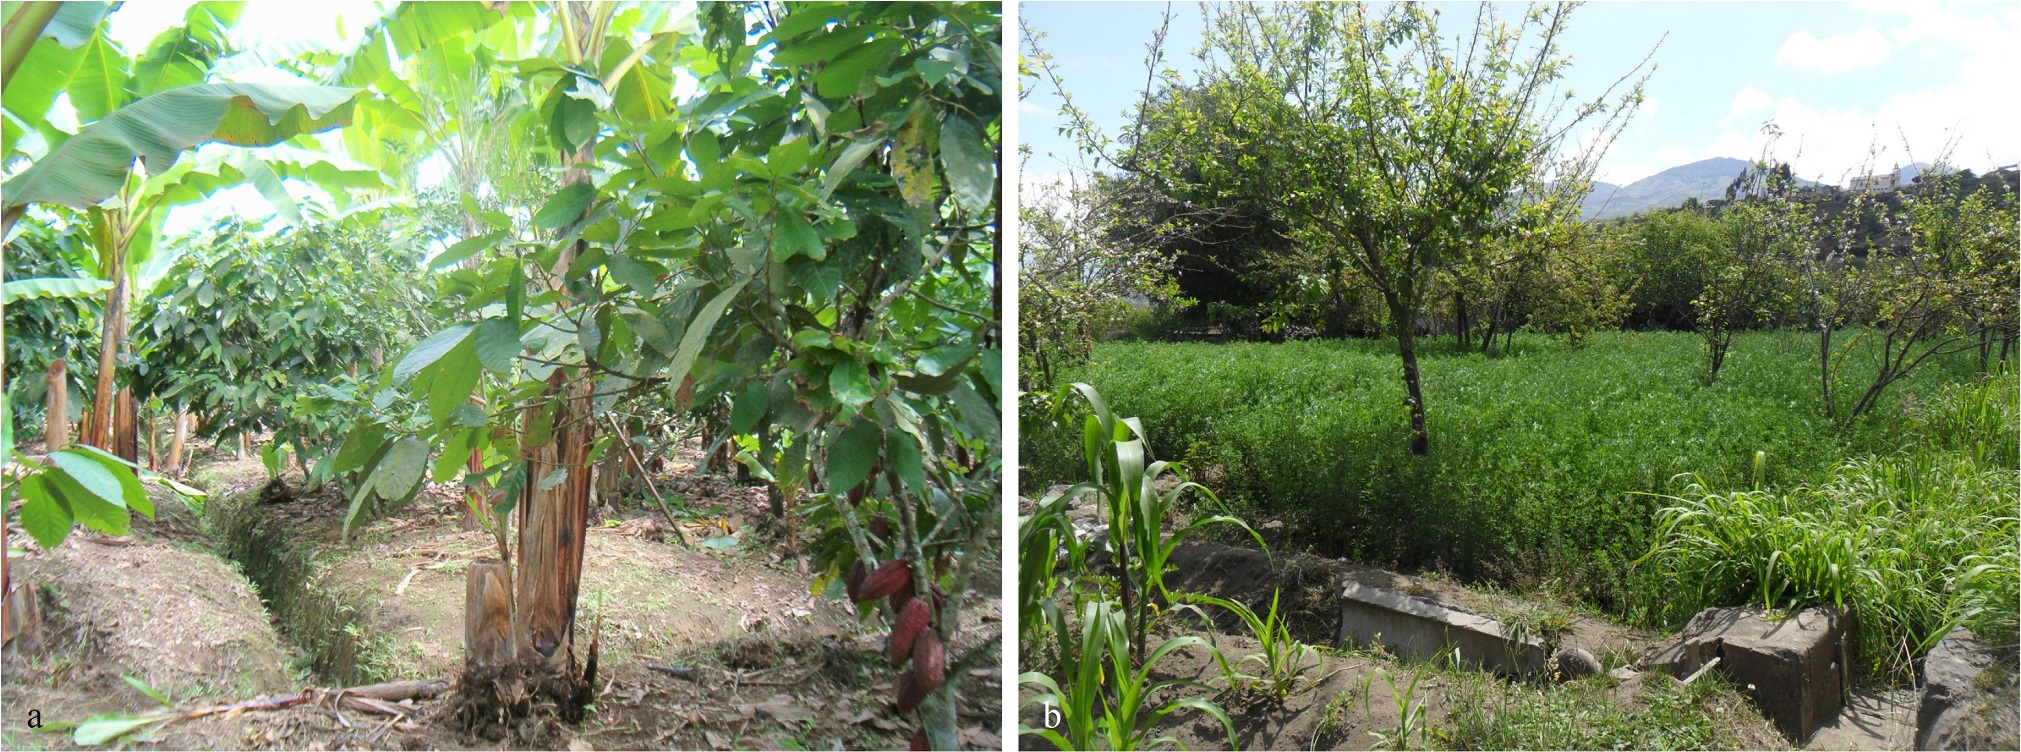 Asociación de cultivos con especies perennes-semiperennes: a. Ecuador-La Maná, b. Ecuador-Cevallos.